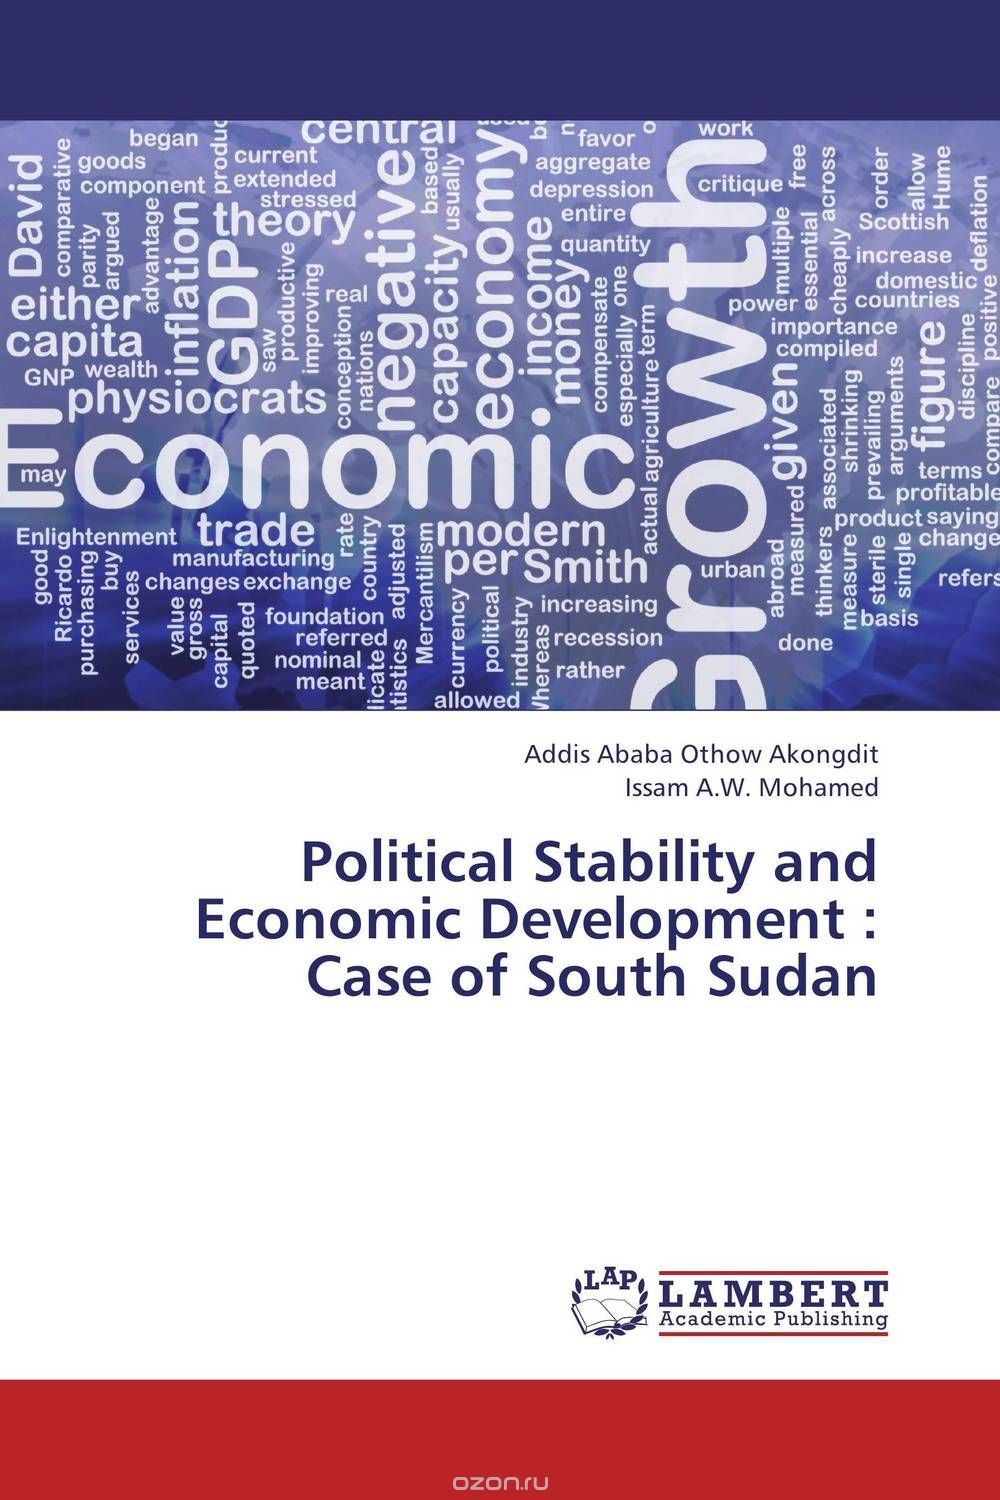 Скачать книгу "Political Stability and Economic Development : Case of South Sudan"